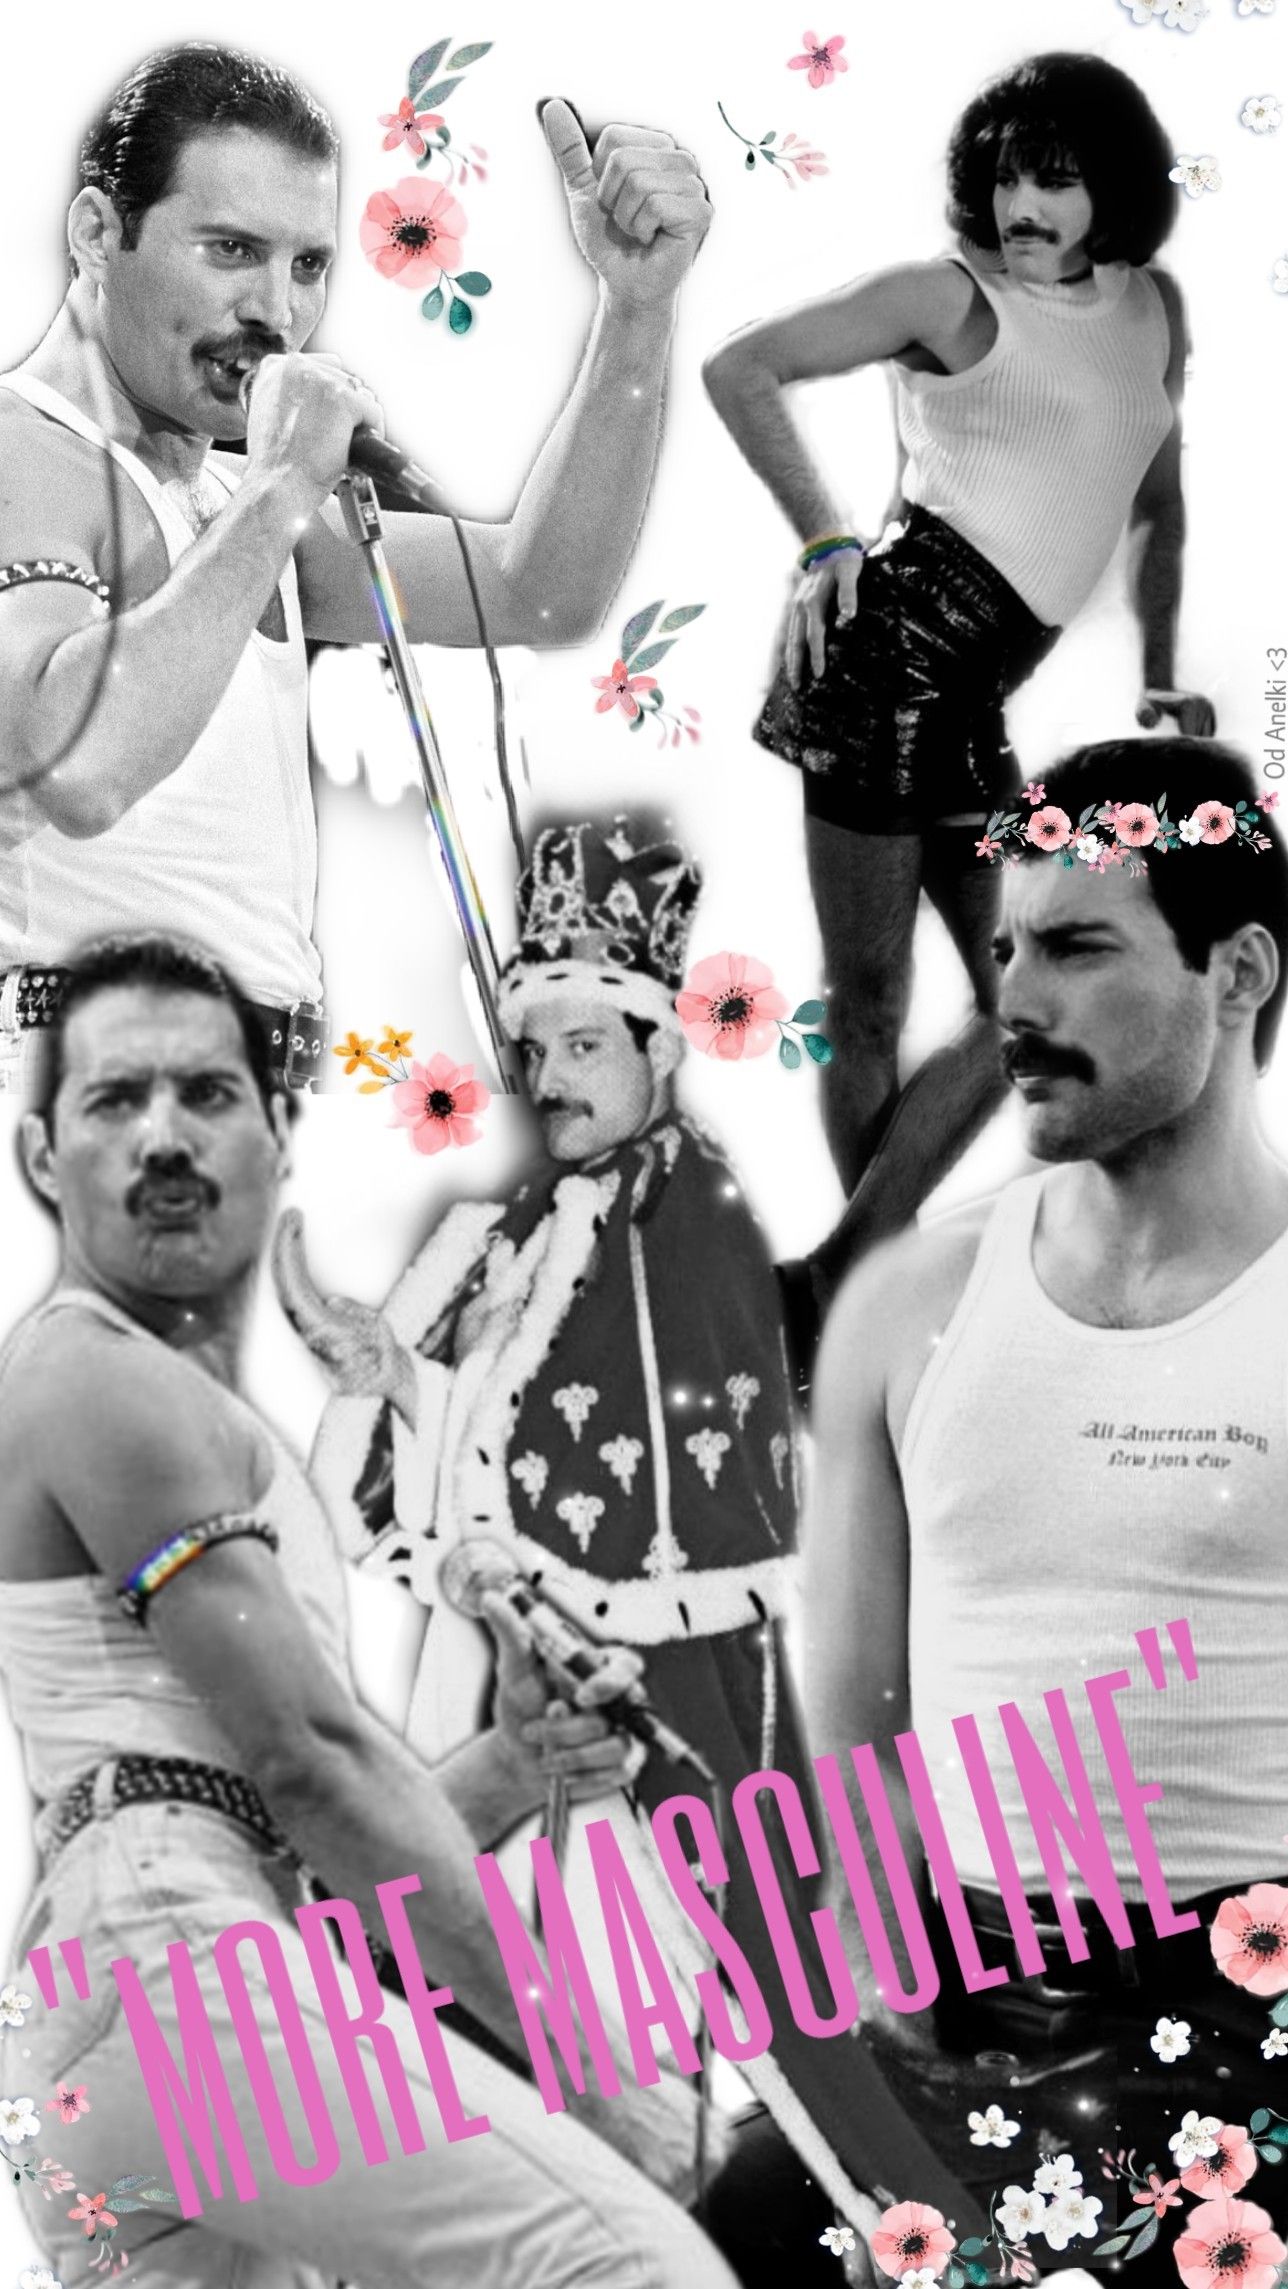 Freddie Mercury Wallpaper Queen by LordAnel. Queen freddie mercury, Queens wallpaper, Queen band